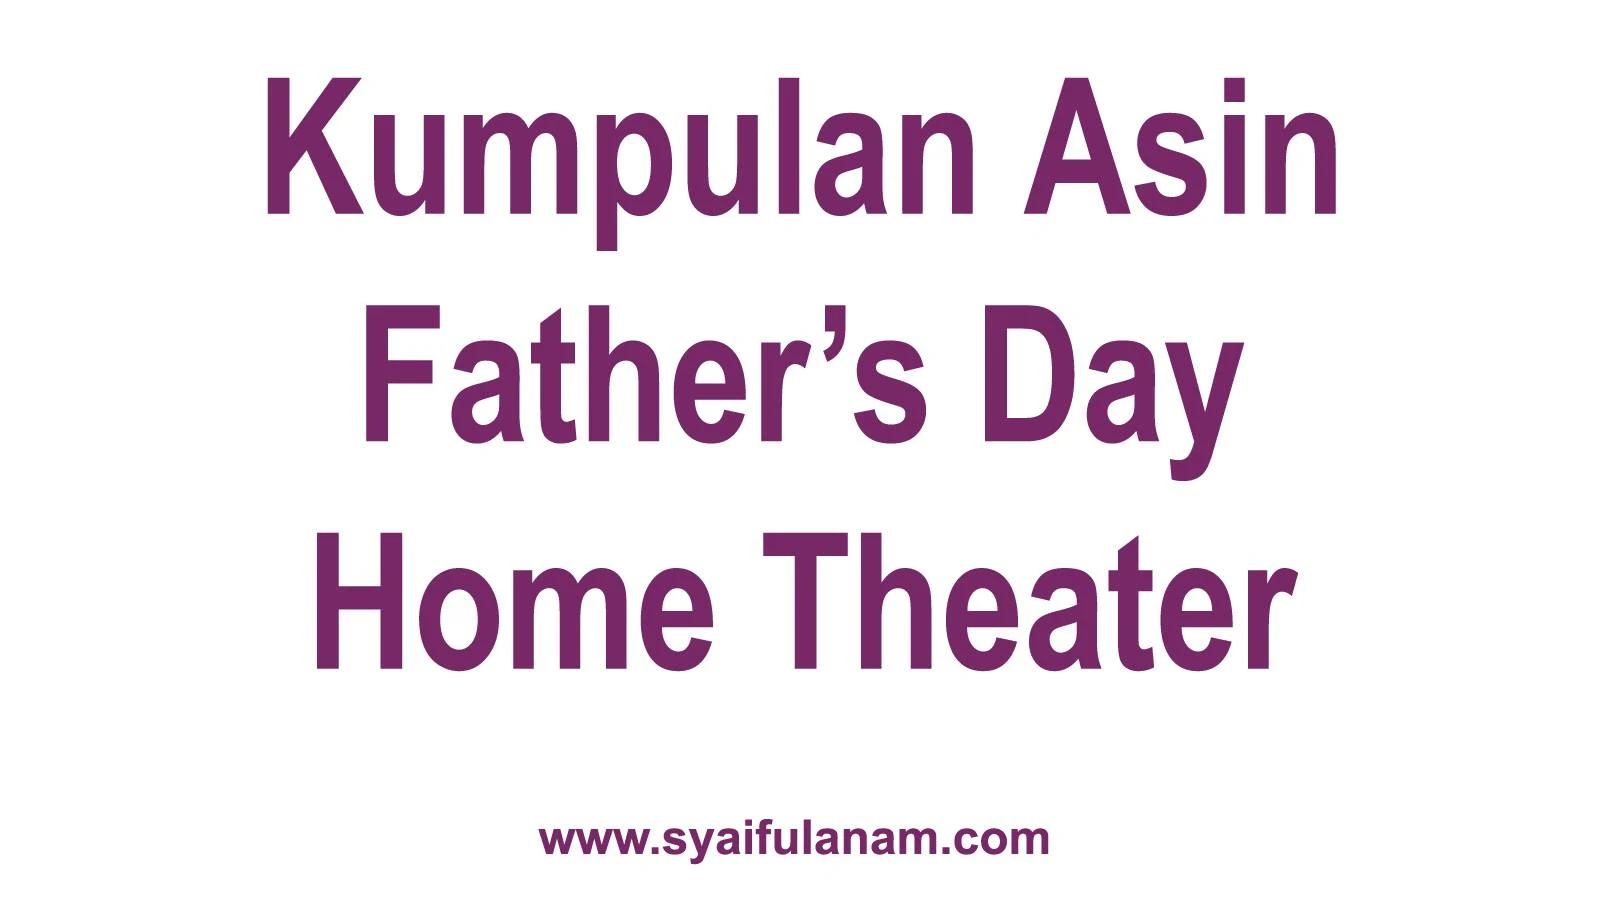 Kumpulan Asin Father's Day Home Theater